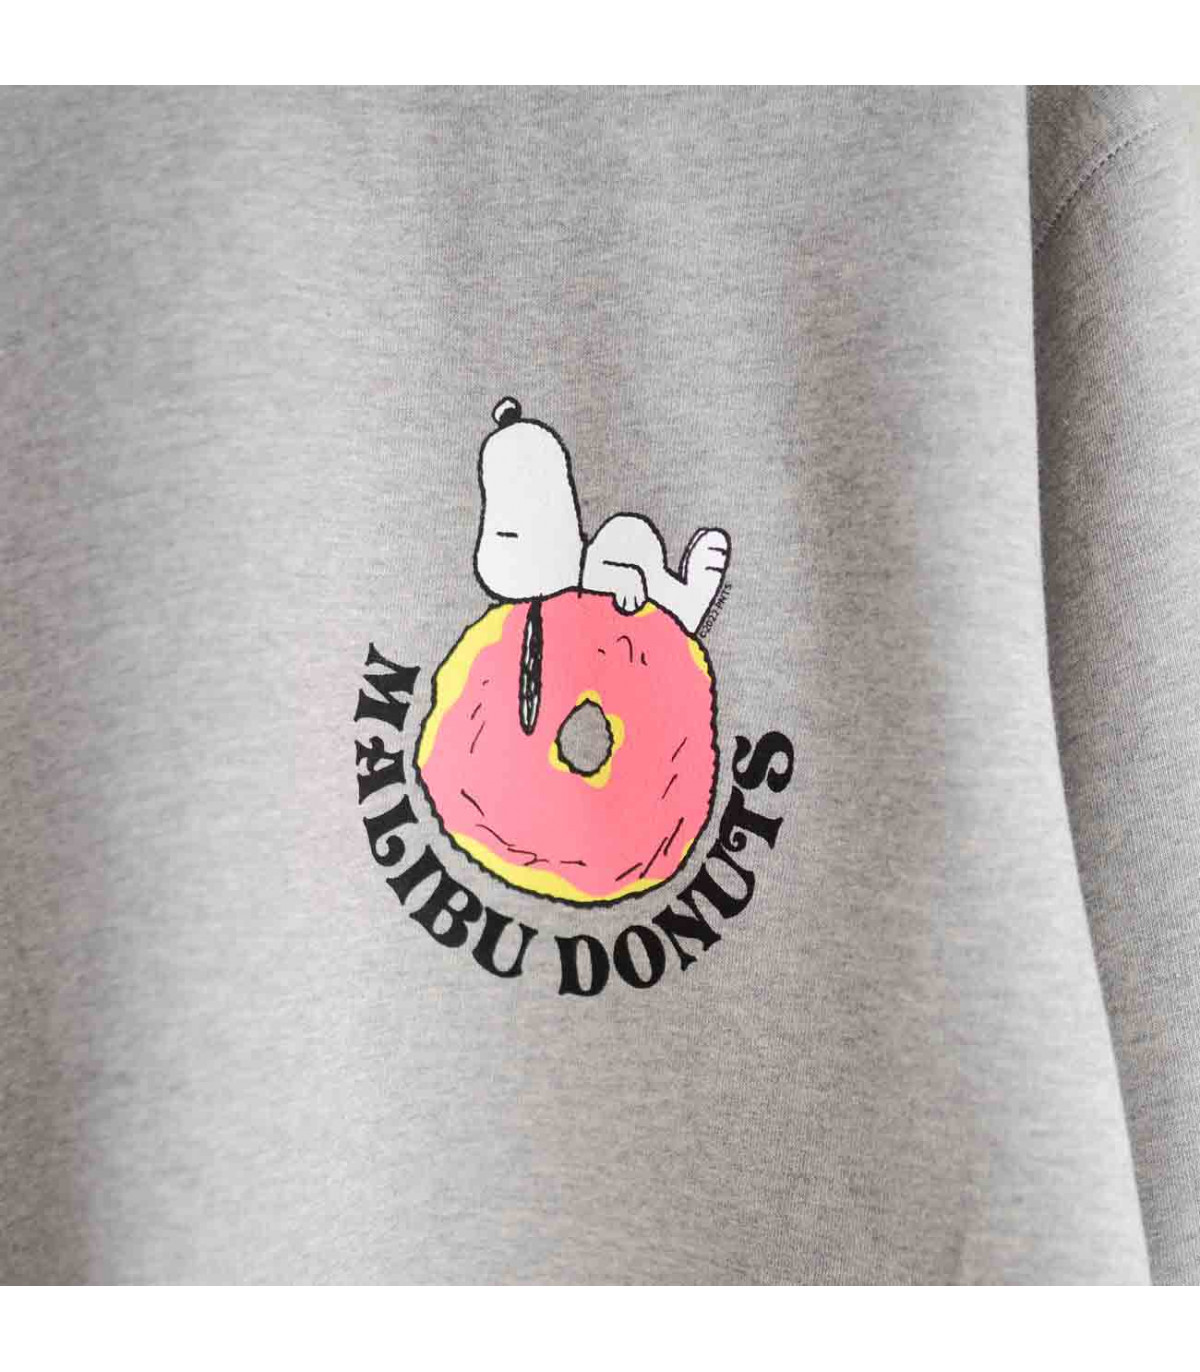 Donut Hole